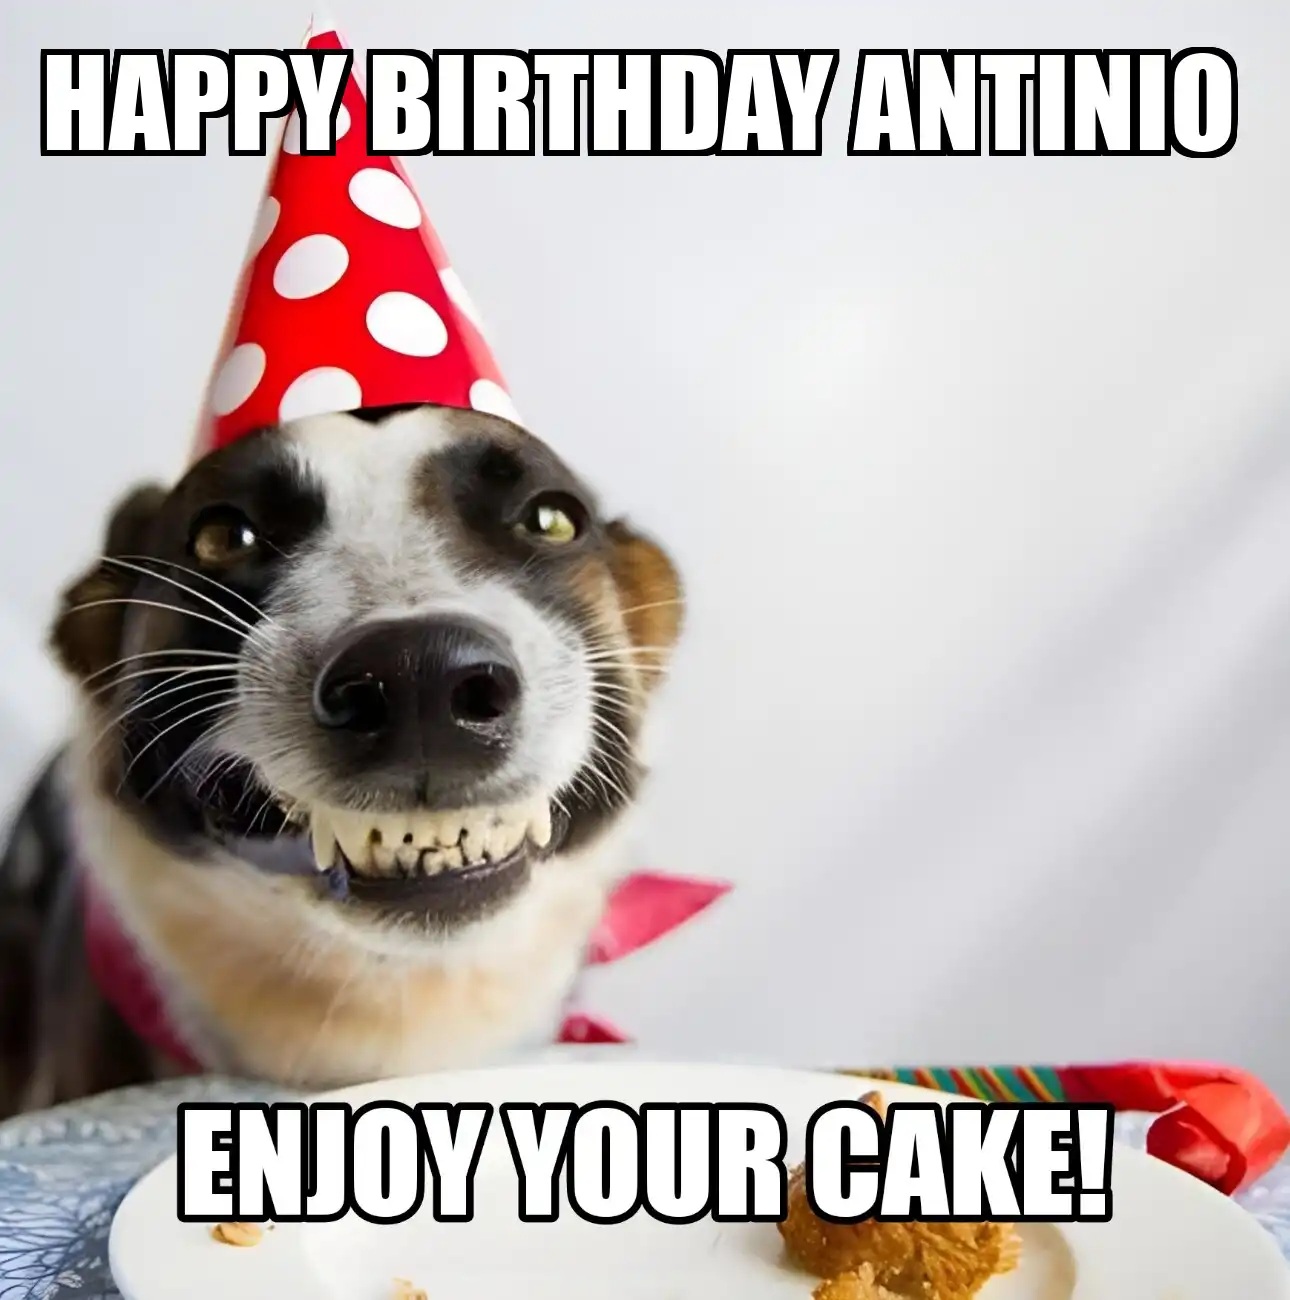 Happy Birthday Antinio Enjoy Your Cake Dog Meme